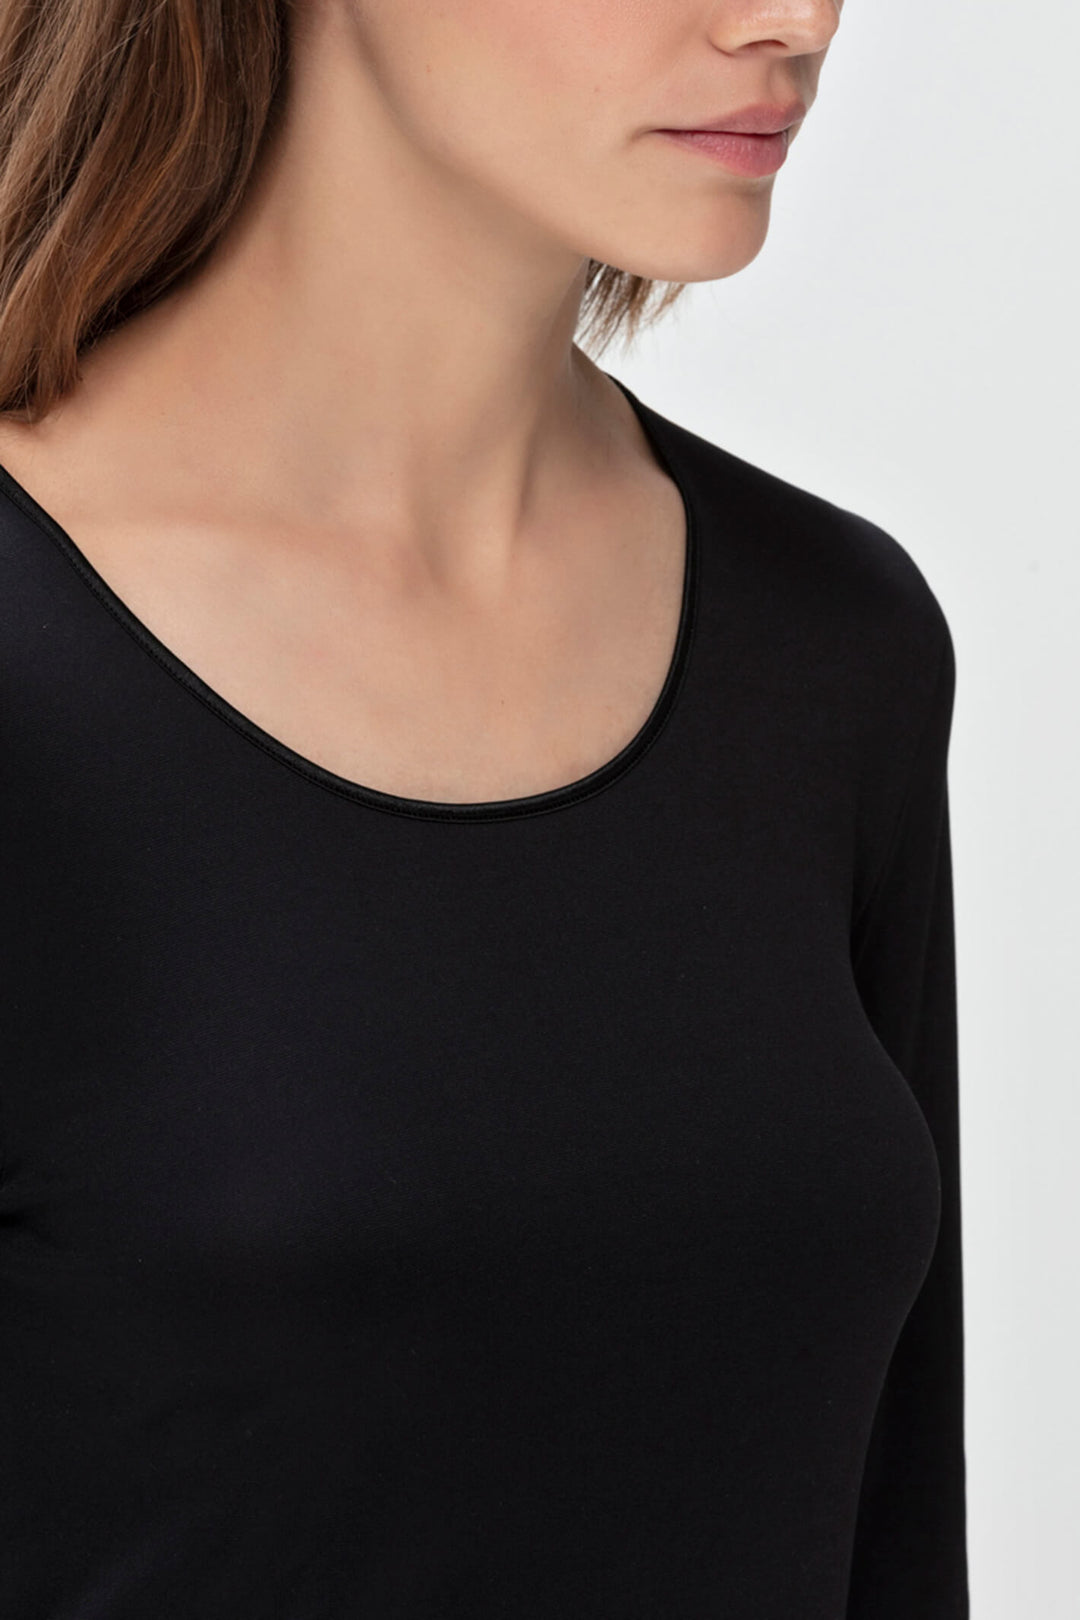 Mey 56202 Long Sleeved Black Top - Olivia Grace Fashion